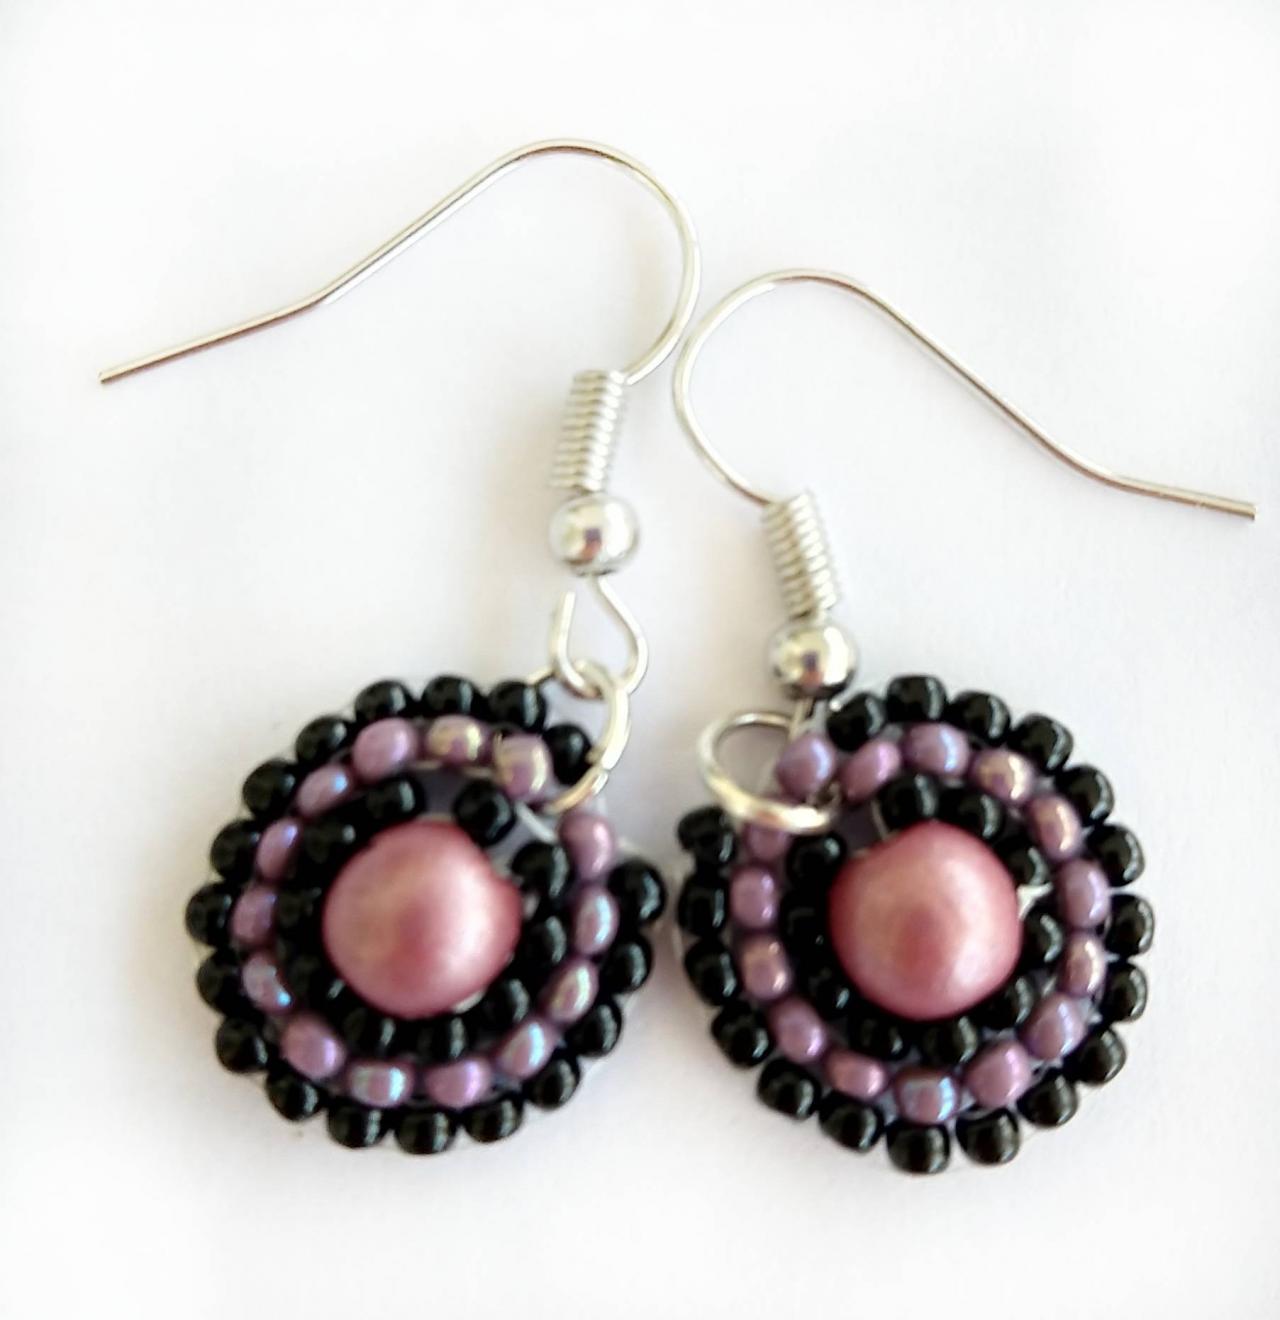 Beaded Earrings Pink Beaded Earrings Purple Beaded Earrings Black Beaded Earrings Circular Beaded Earrings Boho Chic Earrings